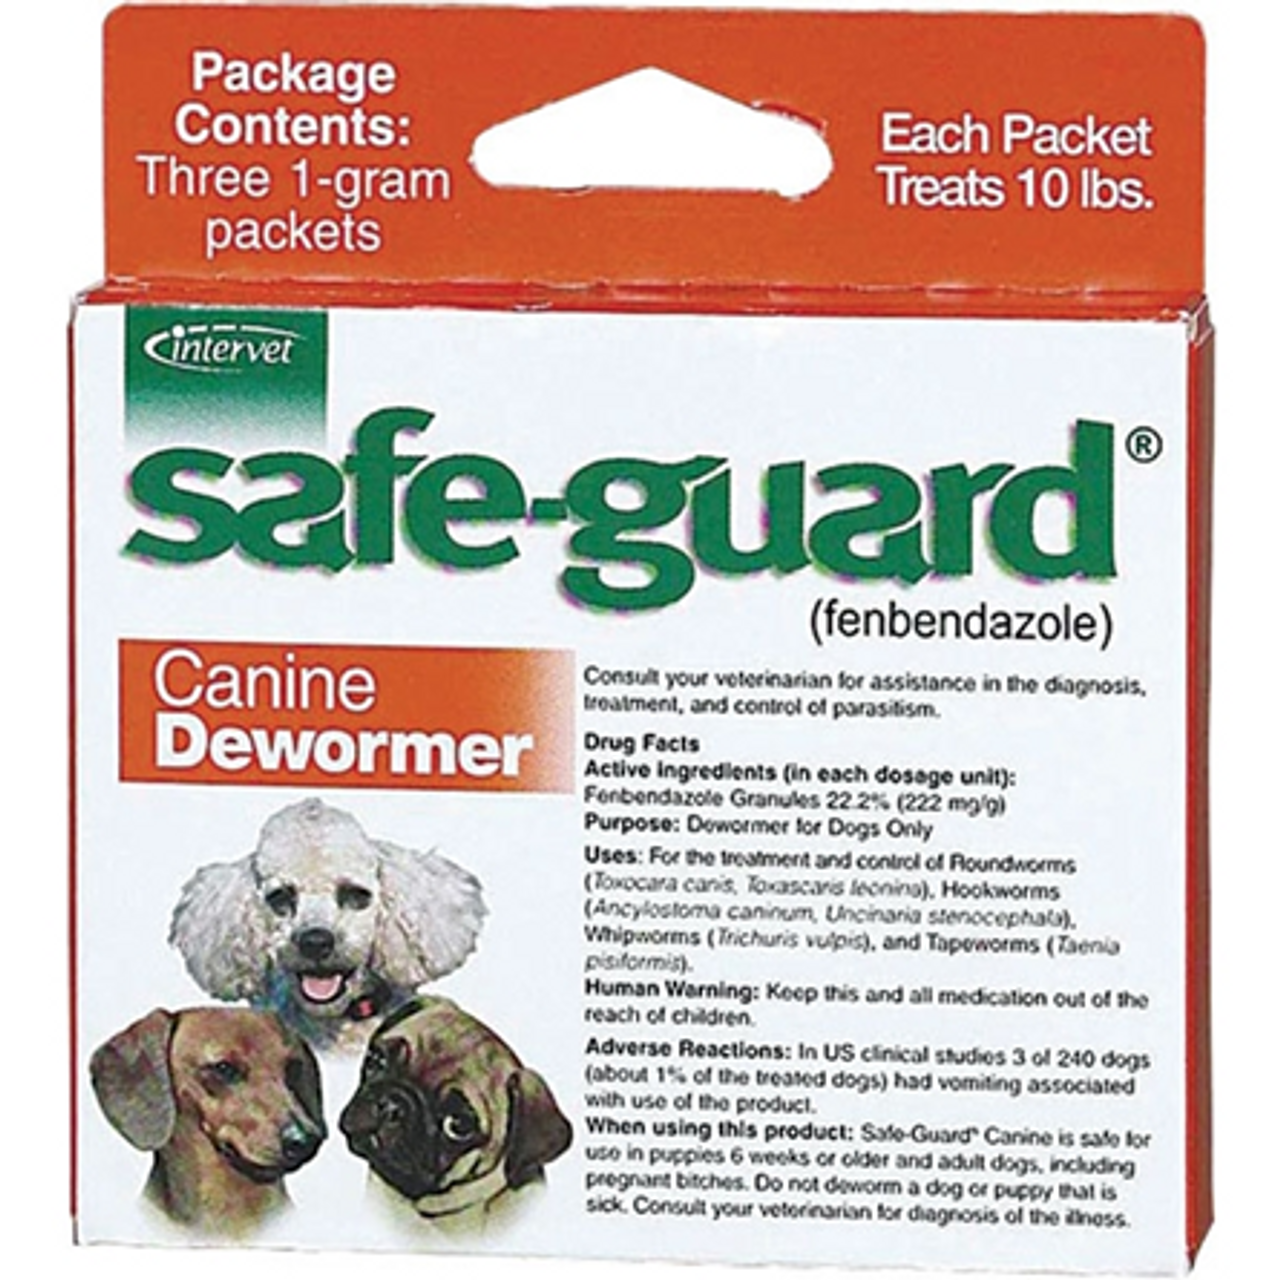 Safe-guard Dog Wormer 10 lbs. - CountryMax